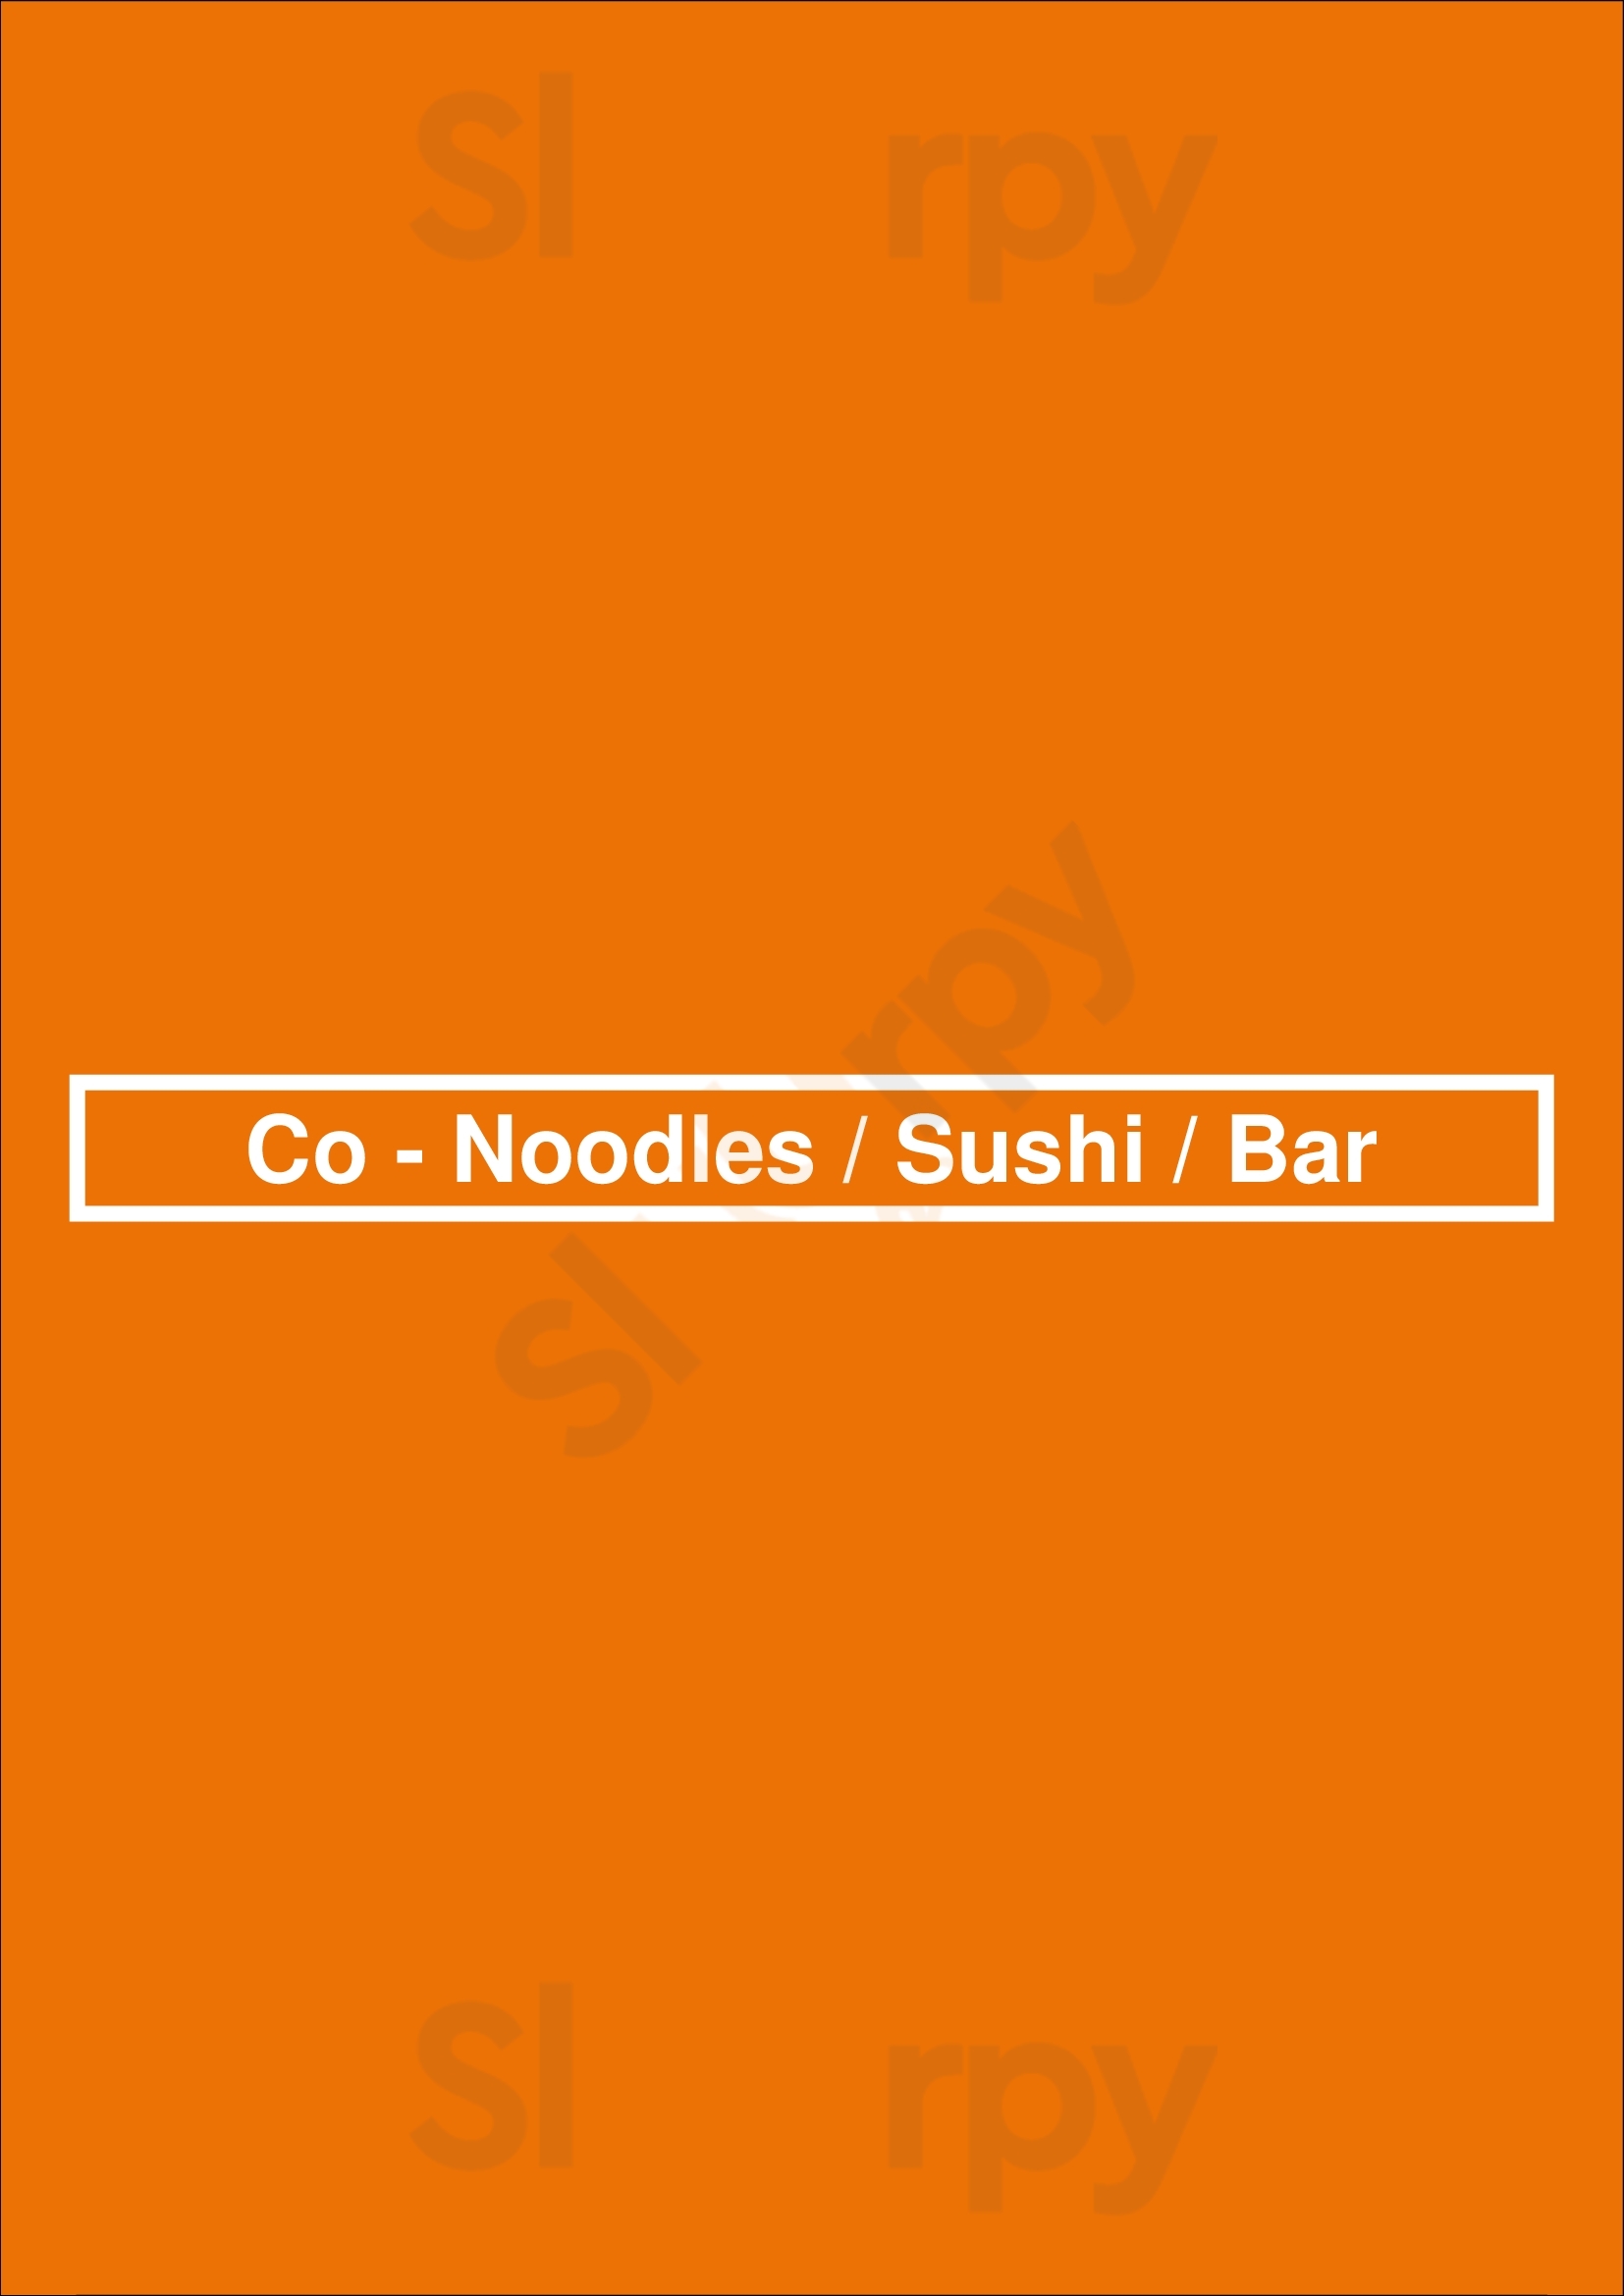 Co - Noodles / Sushi / Bar Atlanta Menu - 1